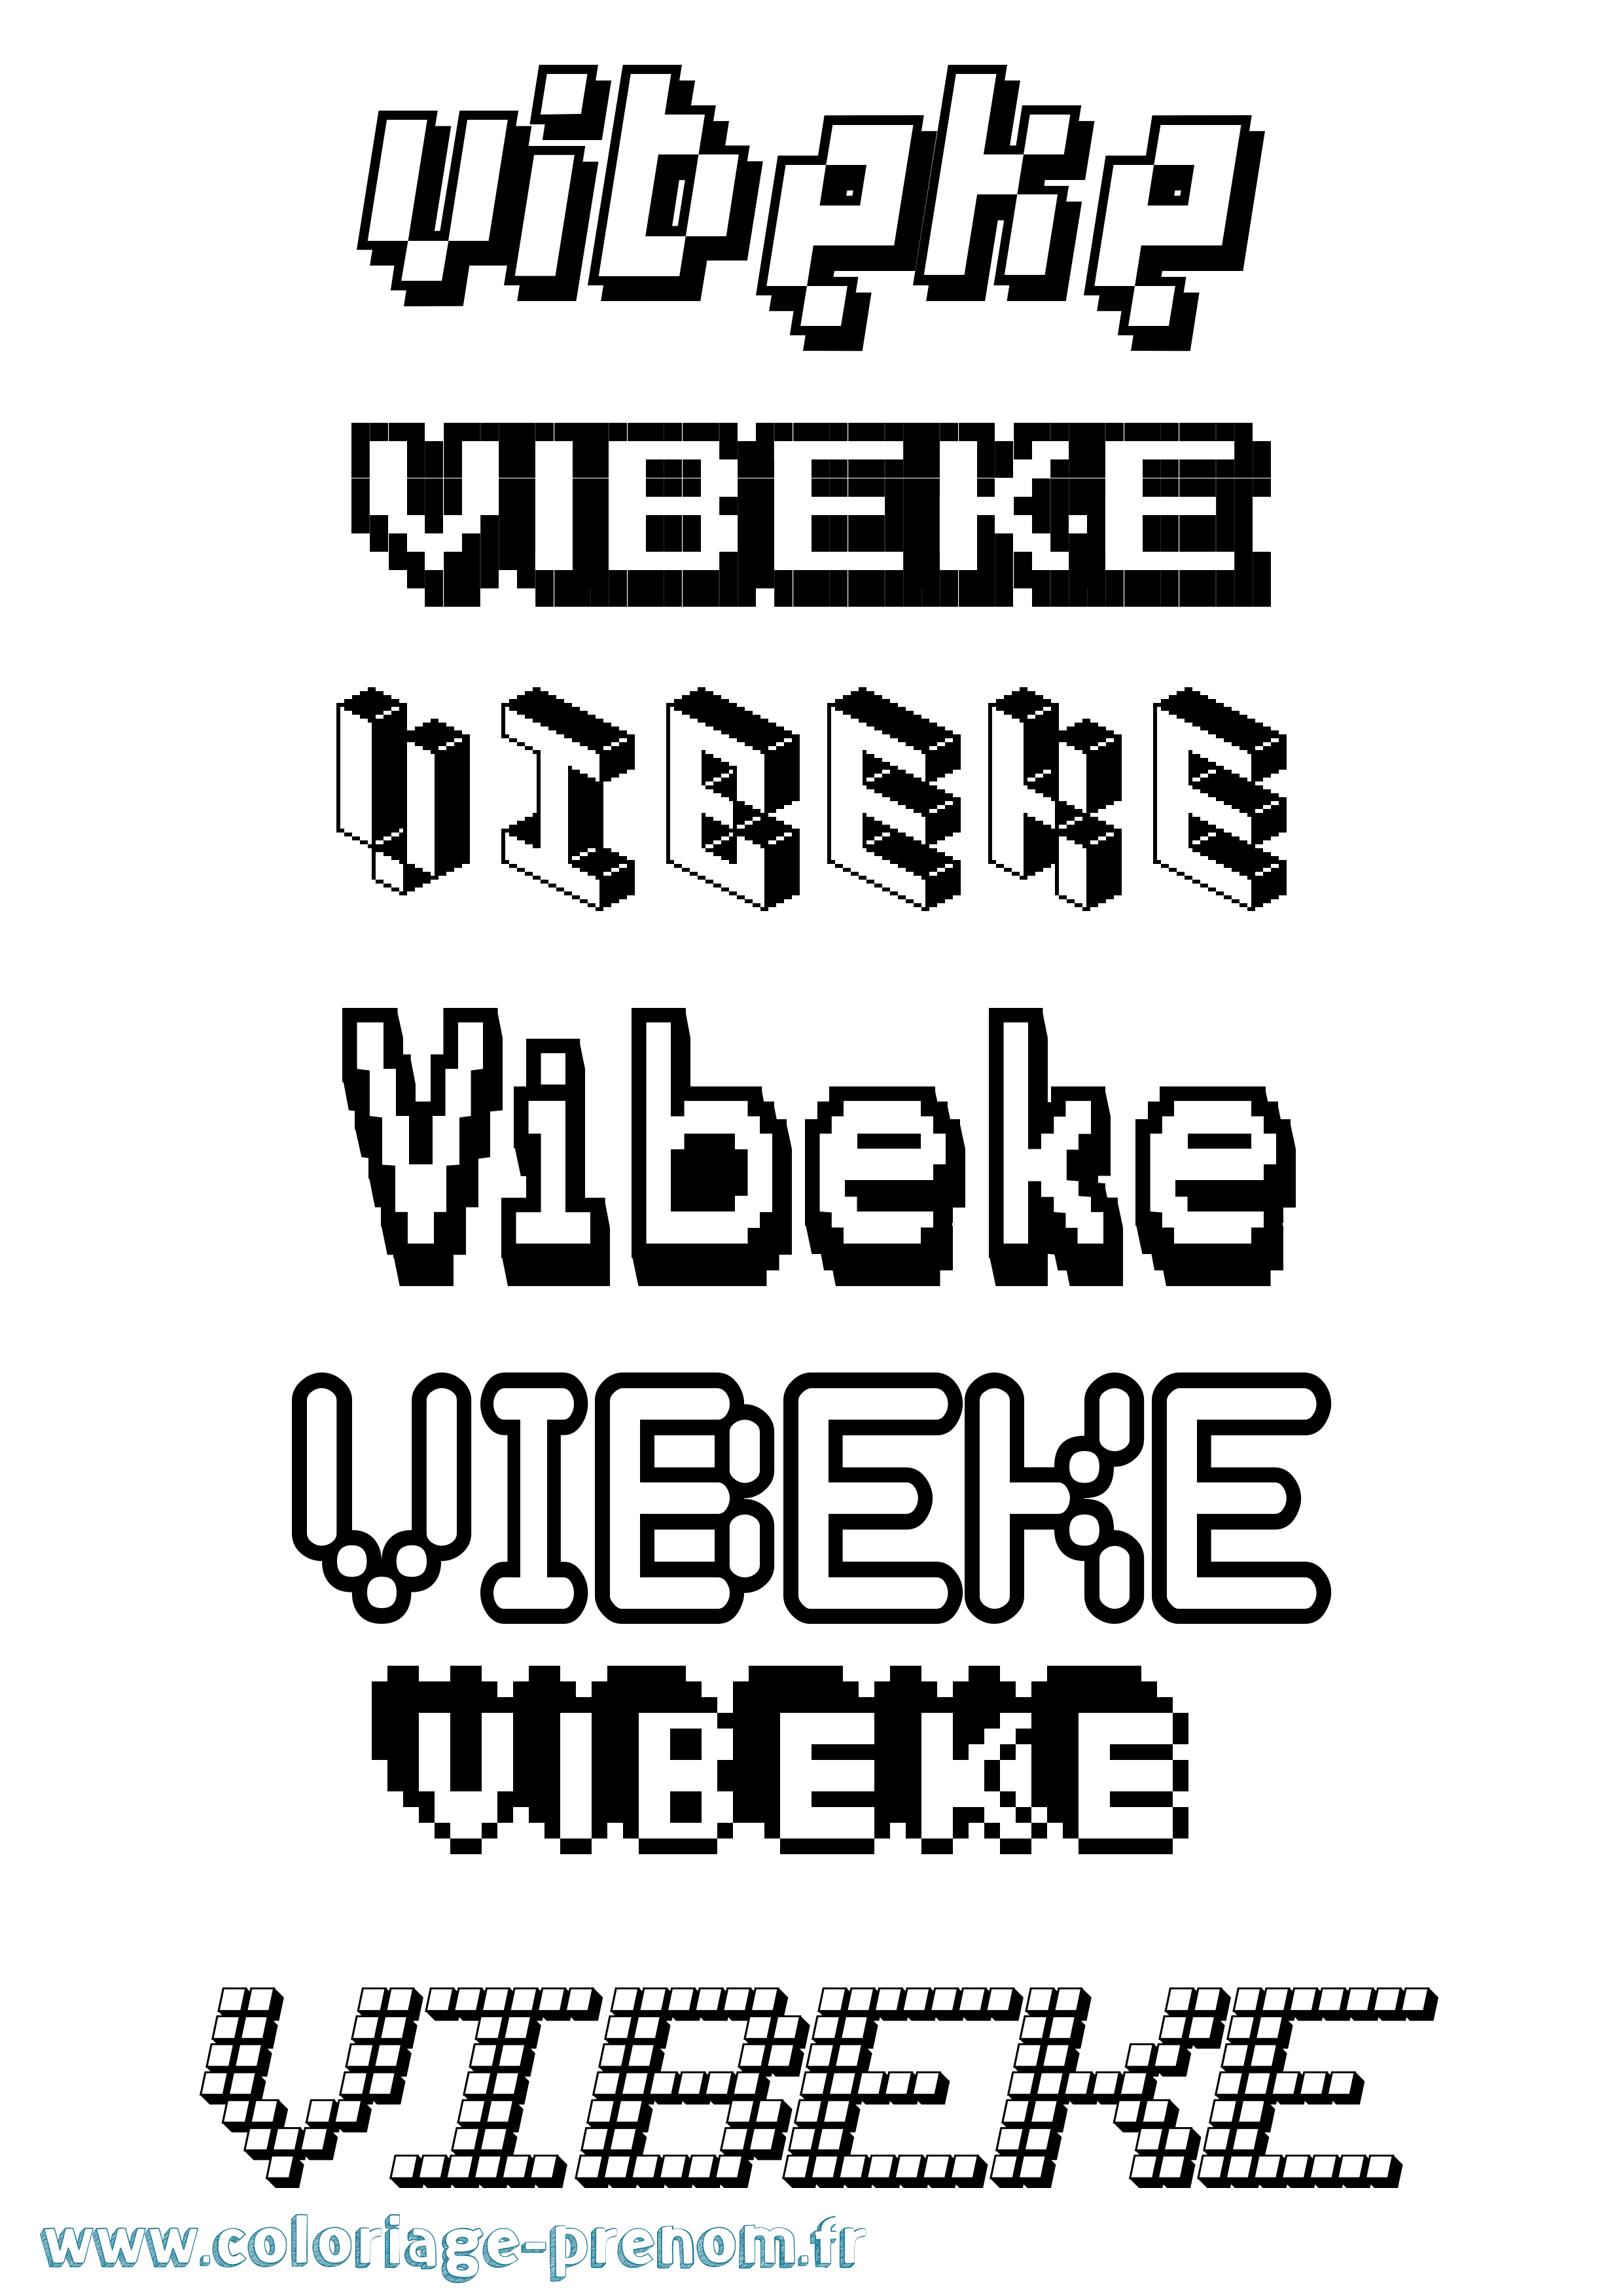 Coloriage prénom Vibeke Pixel